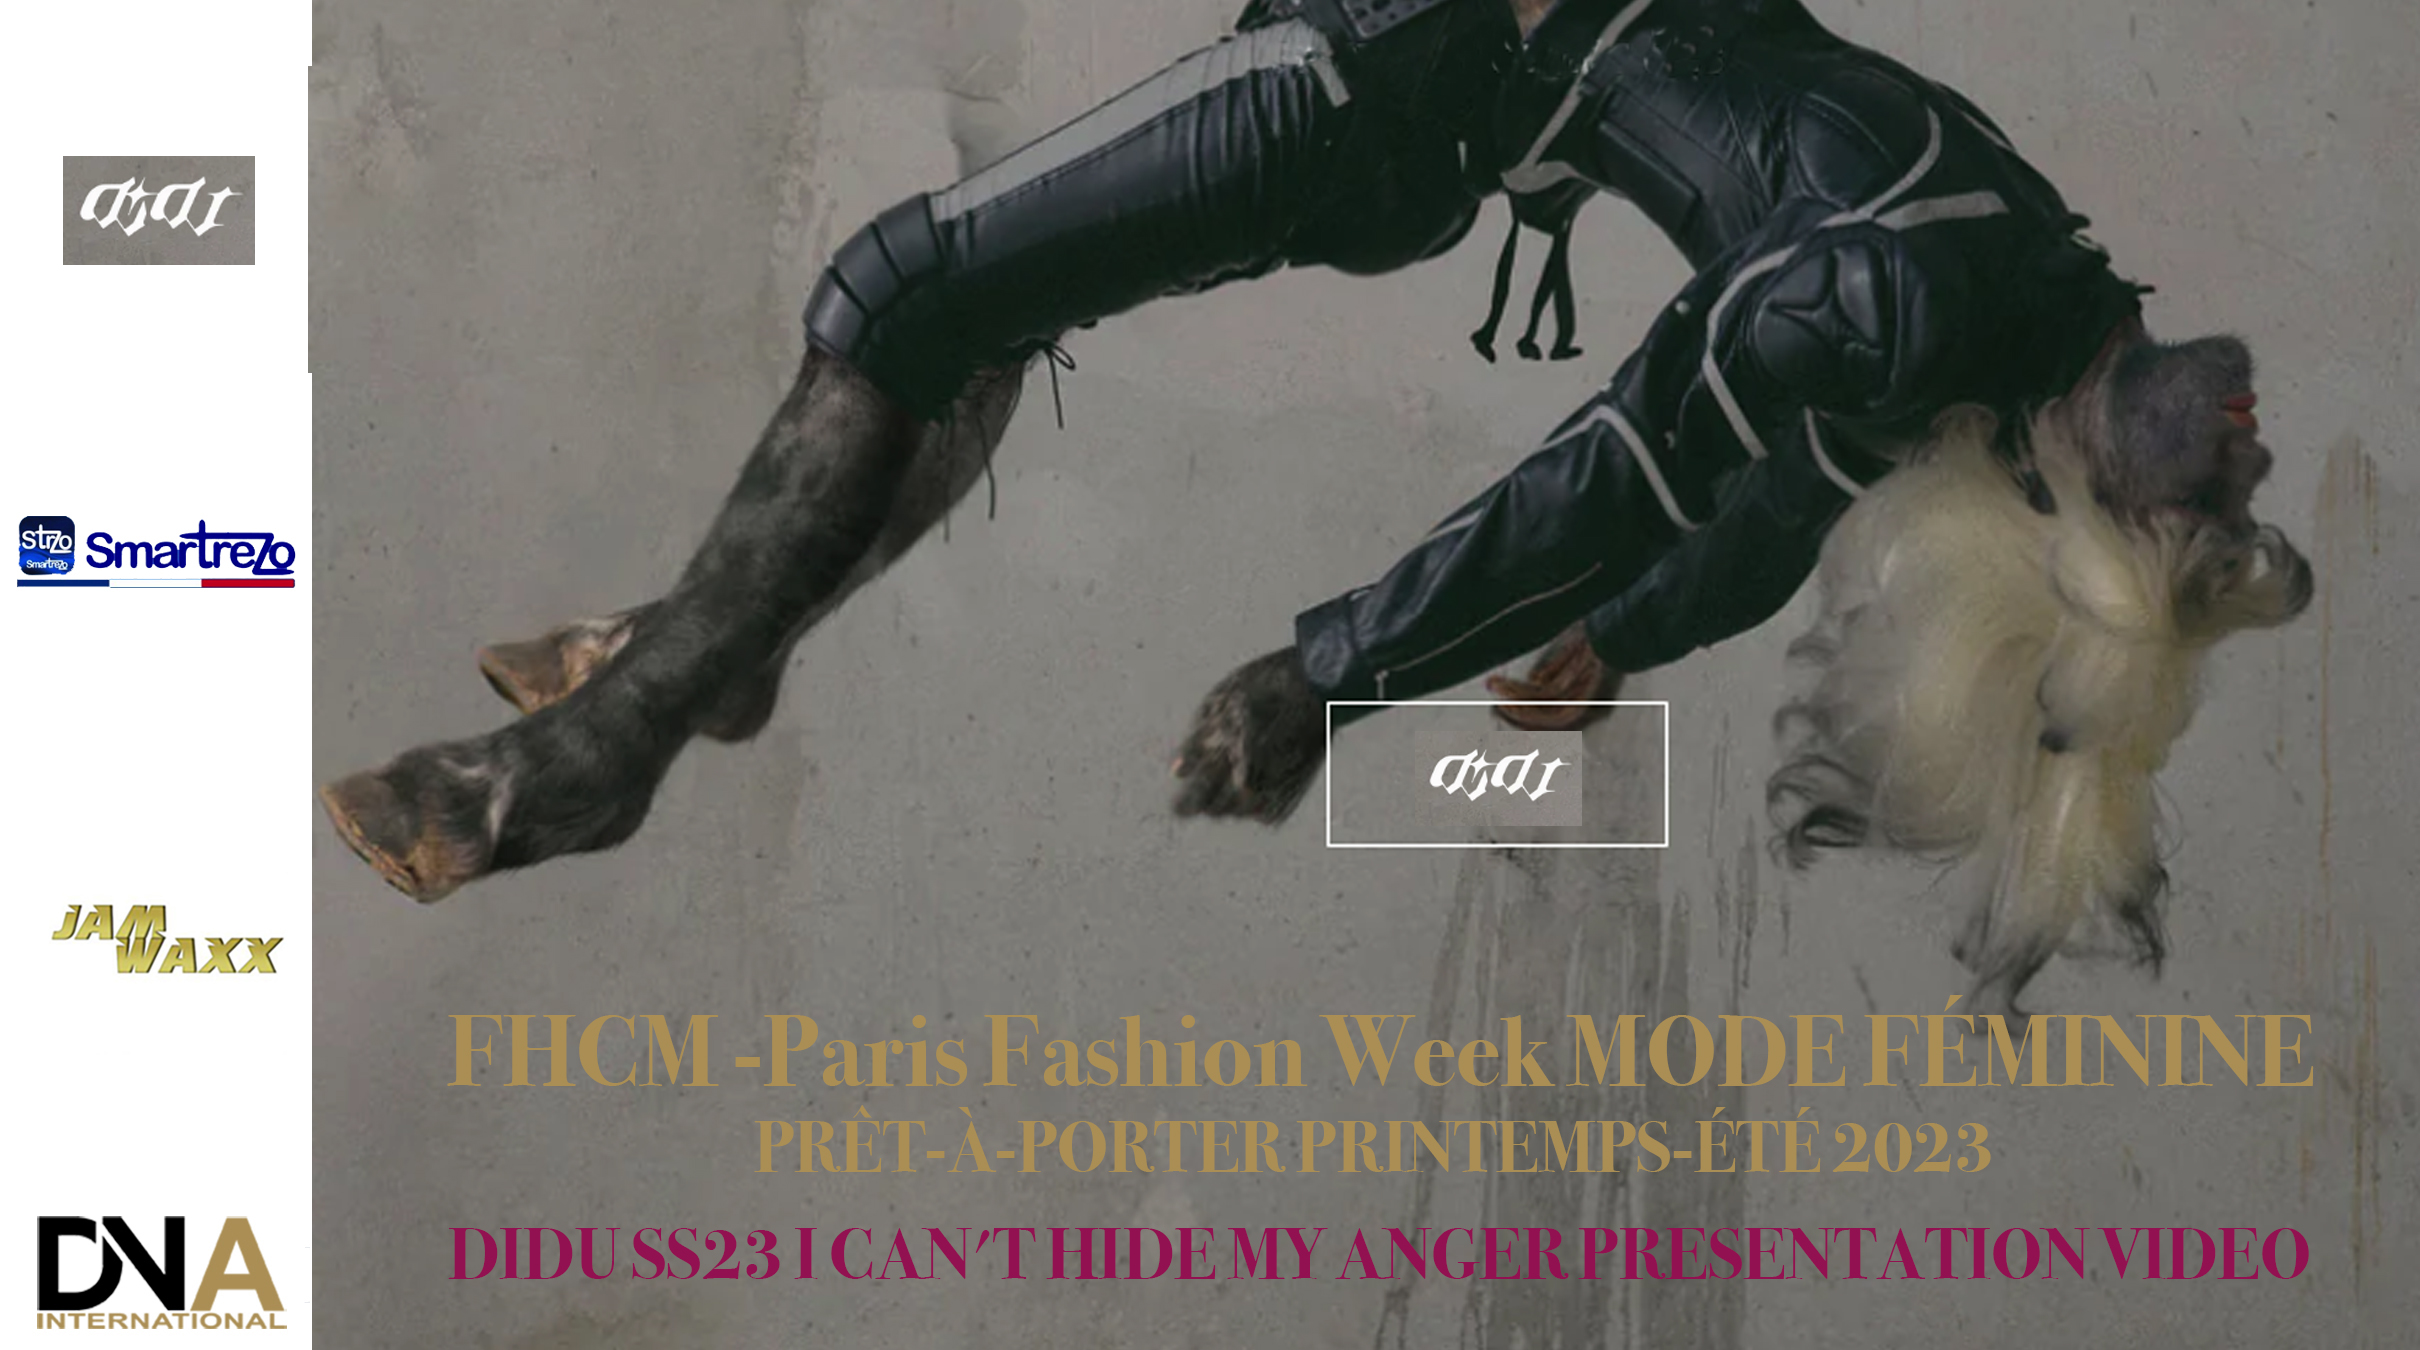 DN-AFRICA-FHCM-Paris-Fashion-Week-MODE-FÉMININE--PRÊT-À-PORTER-PRINTEMPS-ÉTÉ-2023-DIDU-I-CAN'T-HIDE-MY-ANGER--DN-A-INTERNATIONAL-Media-Partenaire